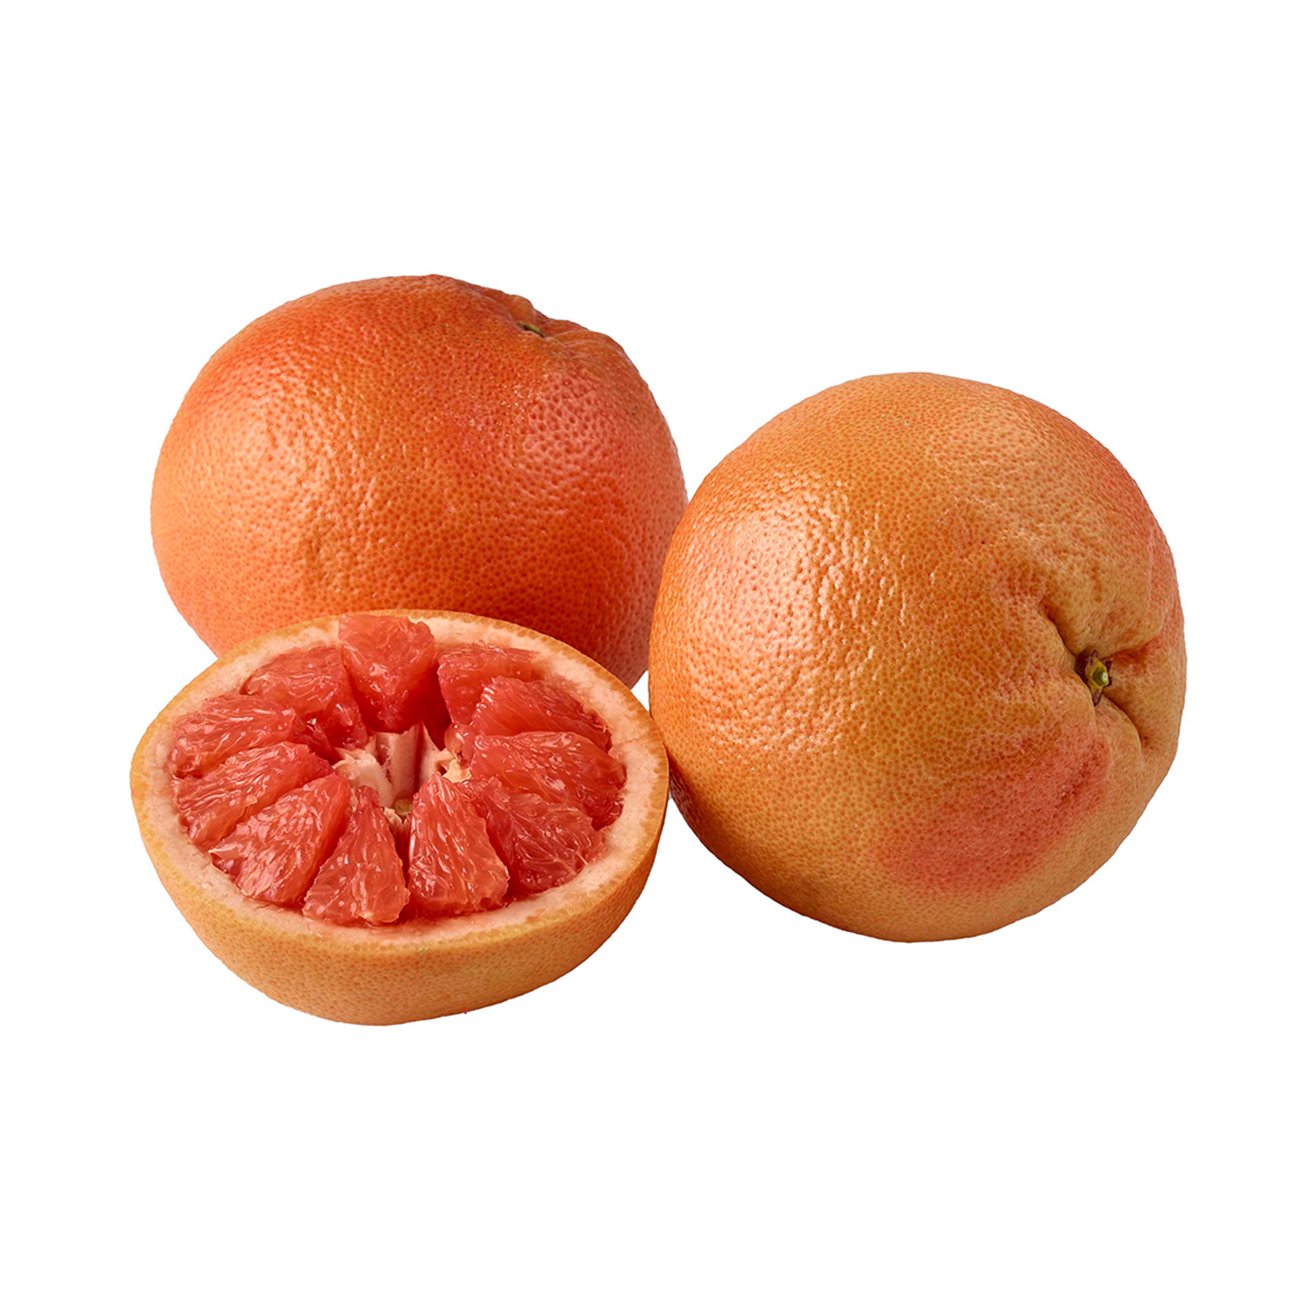 H-E-B Texas Roots Grapefruit - Shop Large H-E-B Citrus at Fresh